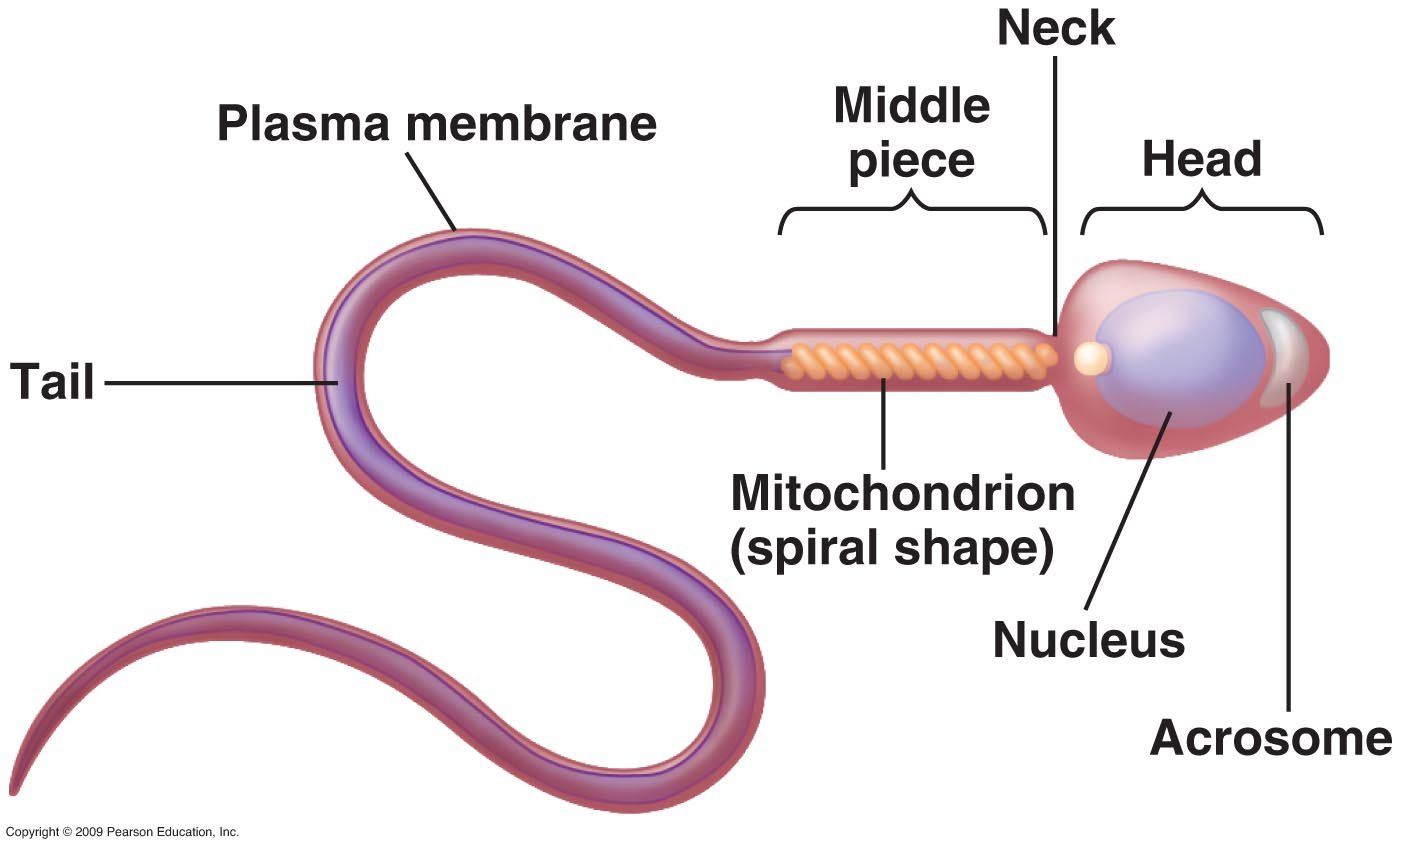 best of Body Sperm cell